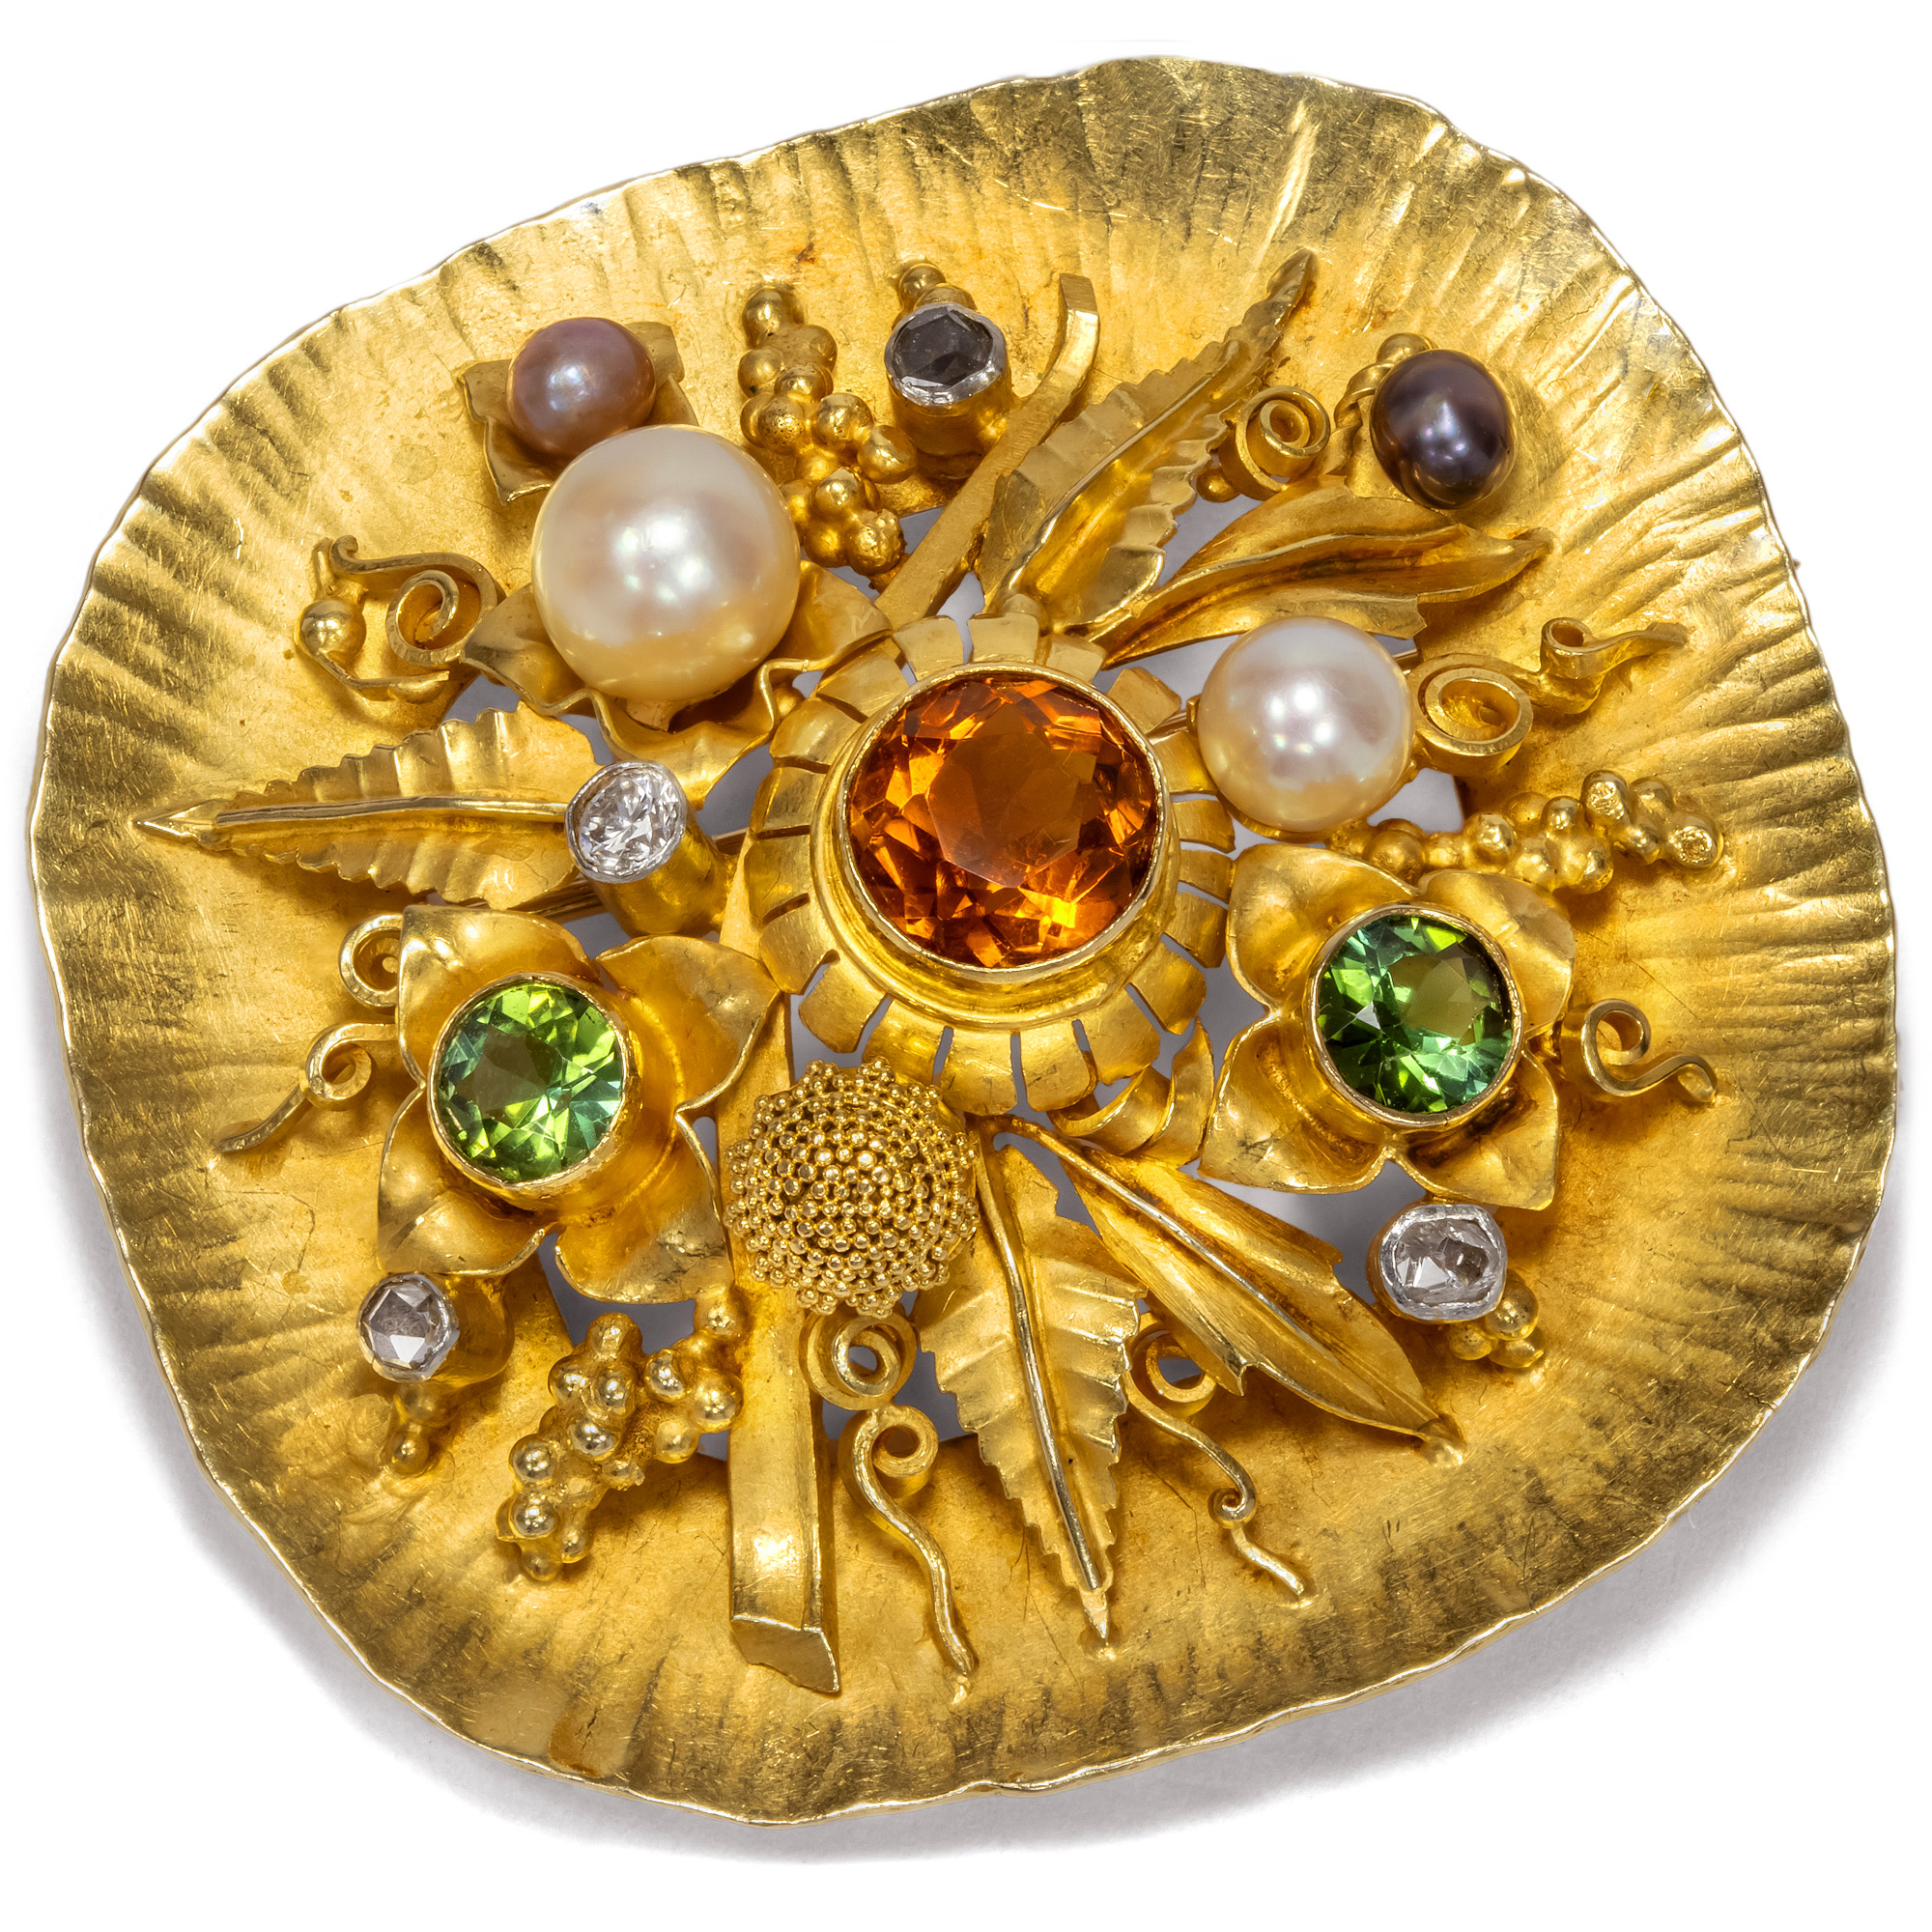 Exquisite Brooch with Gemstones & Pearls by Johann Michael Wilm, Munich c. 1950